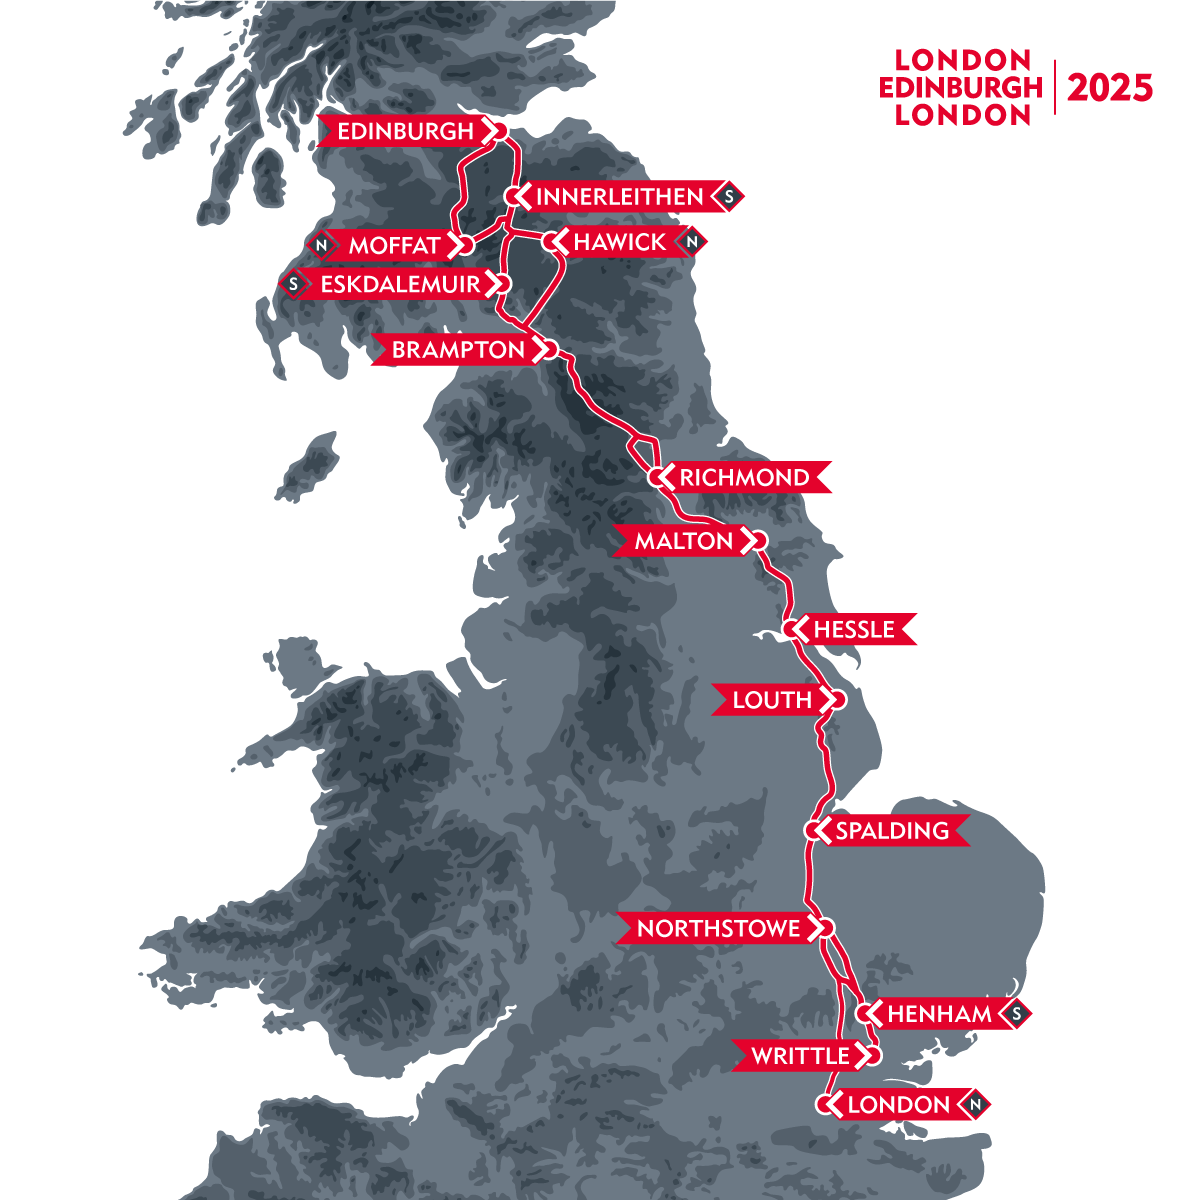 London Edinburgh London 2025 map